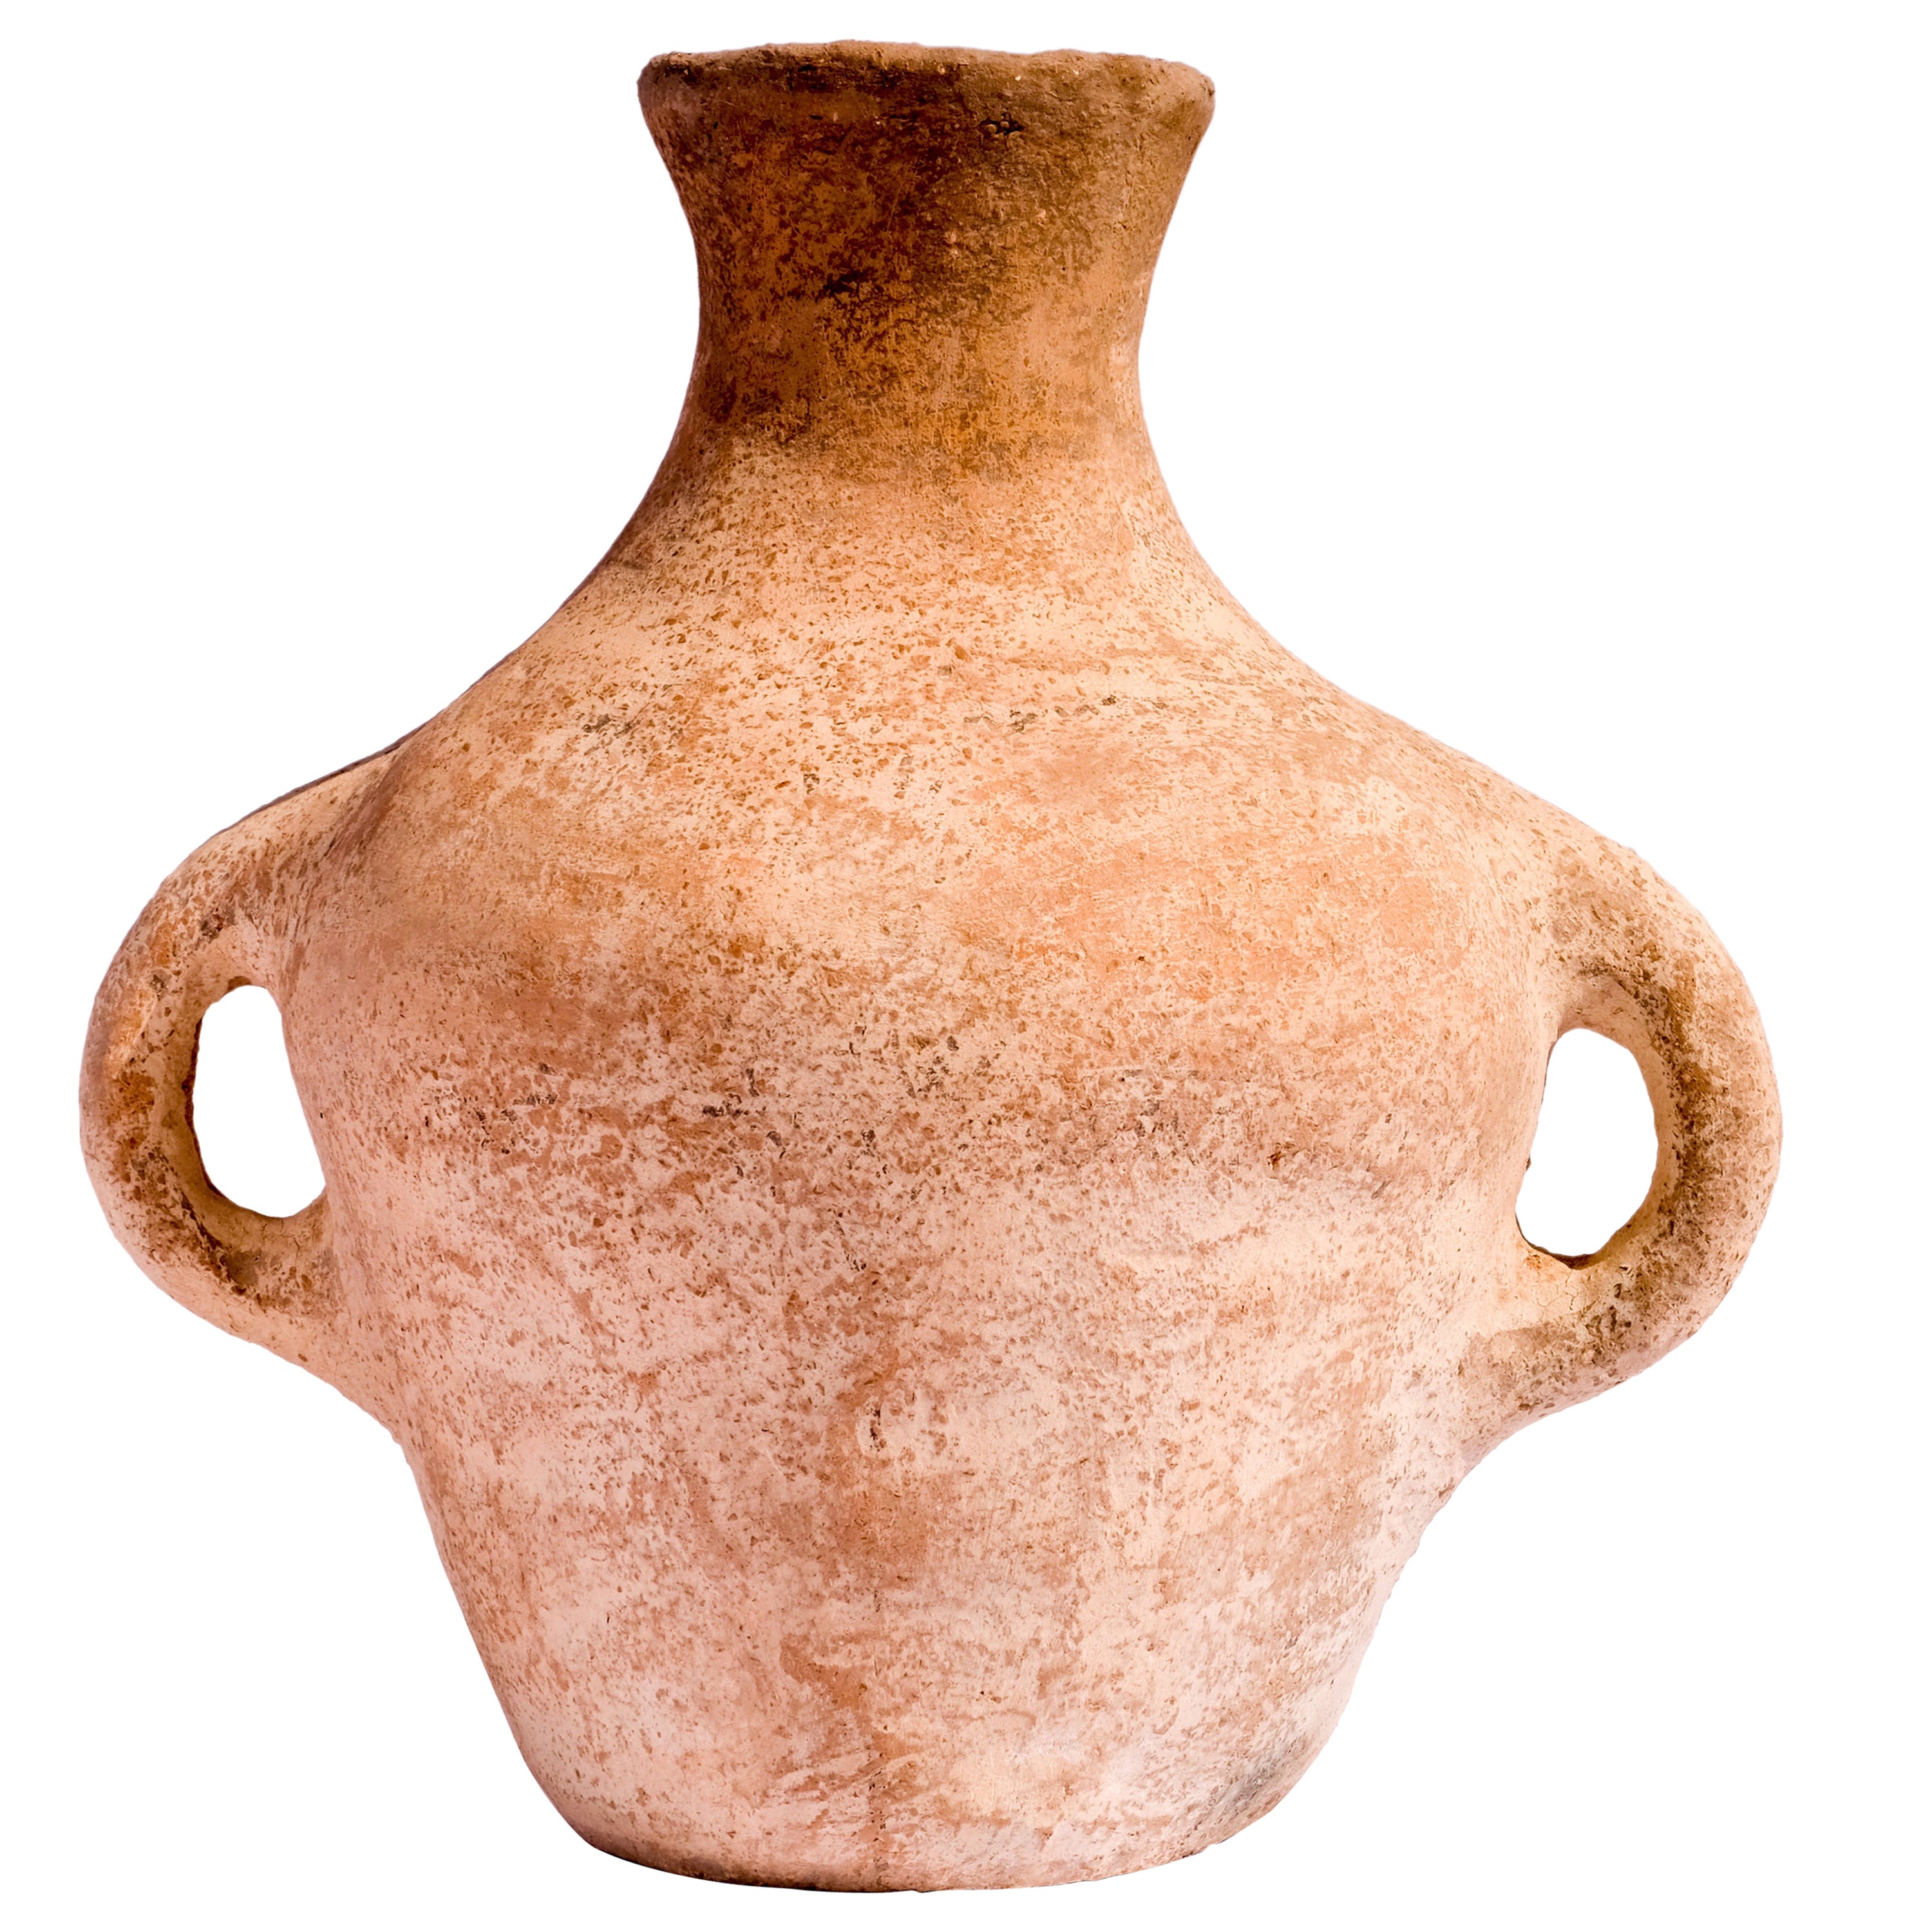 Pot en terre cuite Khabia Freckles fabriqué à la main en argile, fabriqué à la main par le potier Raja